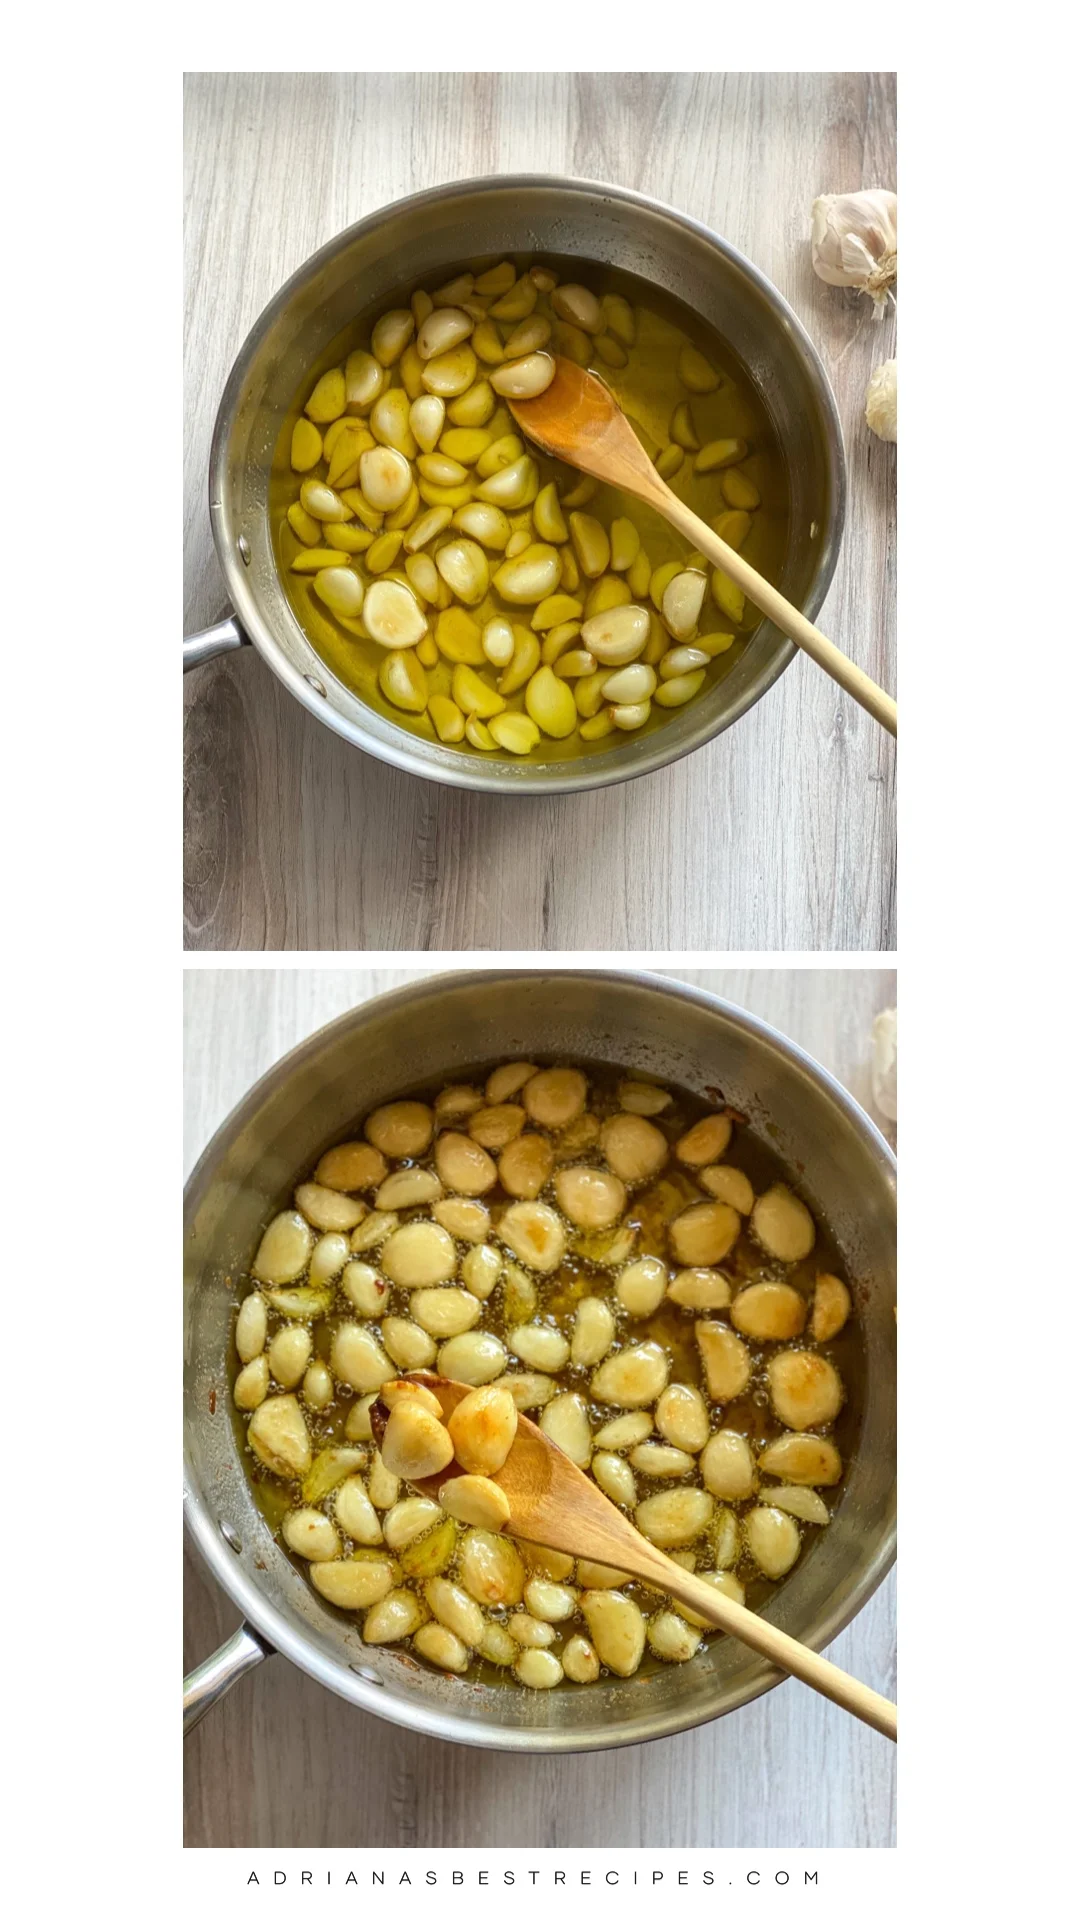 Sauteing garlic cloves in a deep fry pan